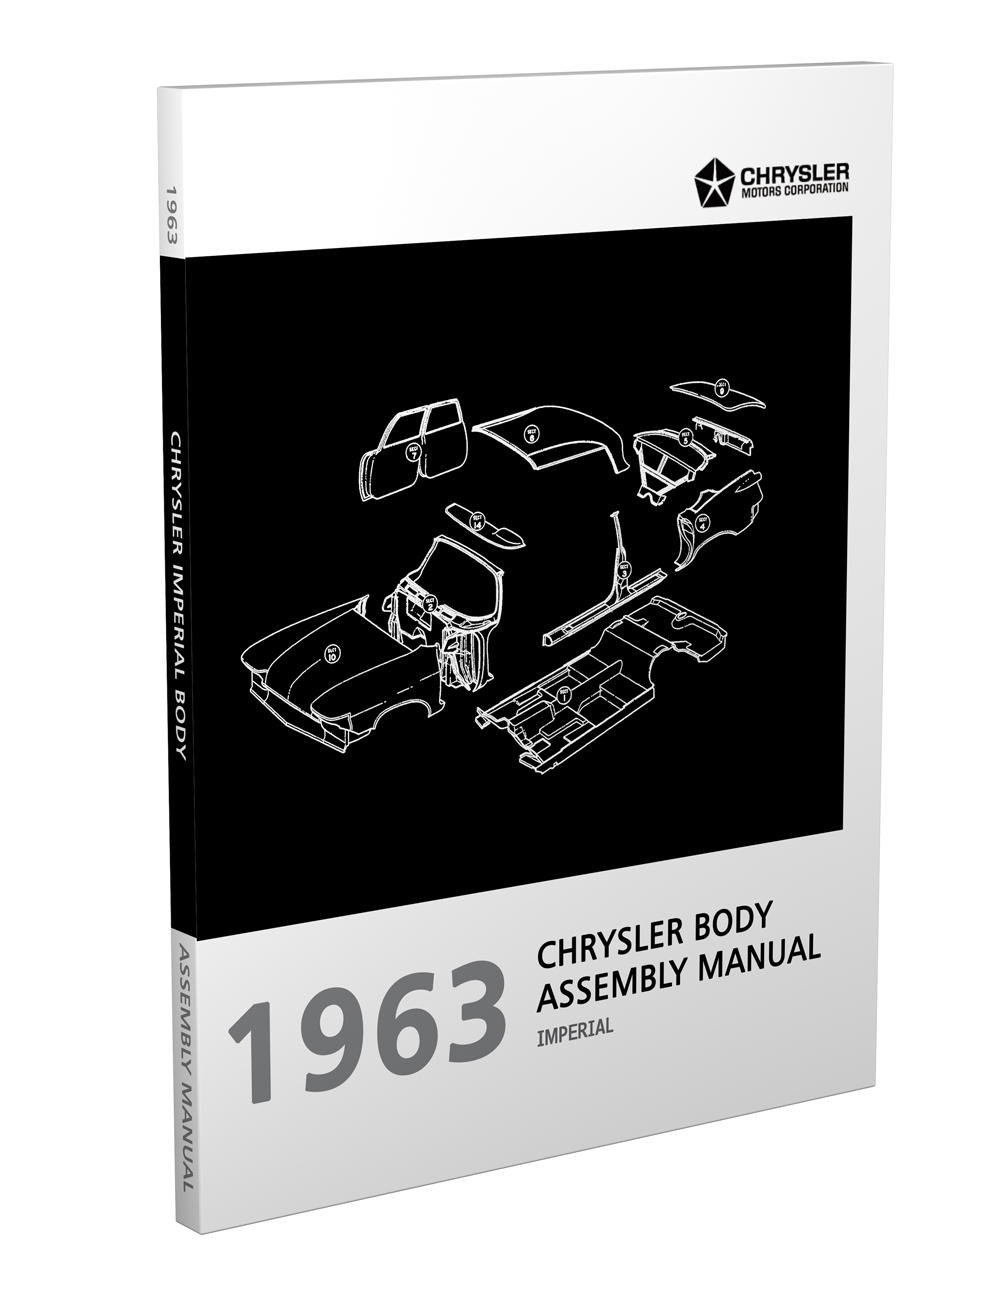 1963 Chrysler Imperial Body Assembly Manual Reprint